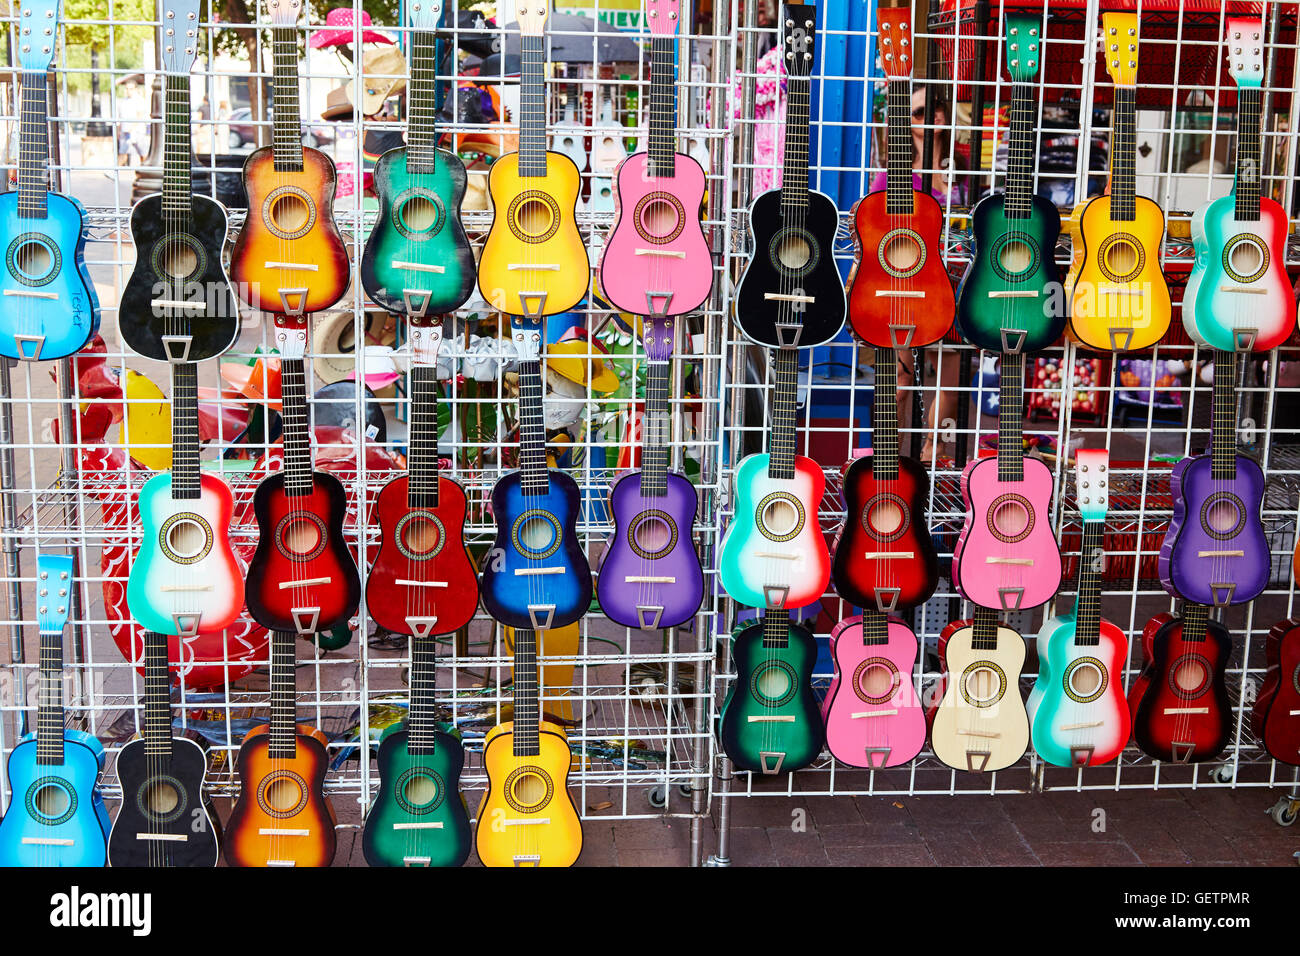 Display of mini guitars. Stock Photo